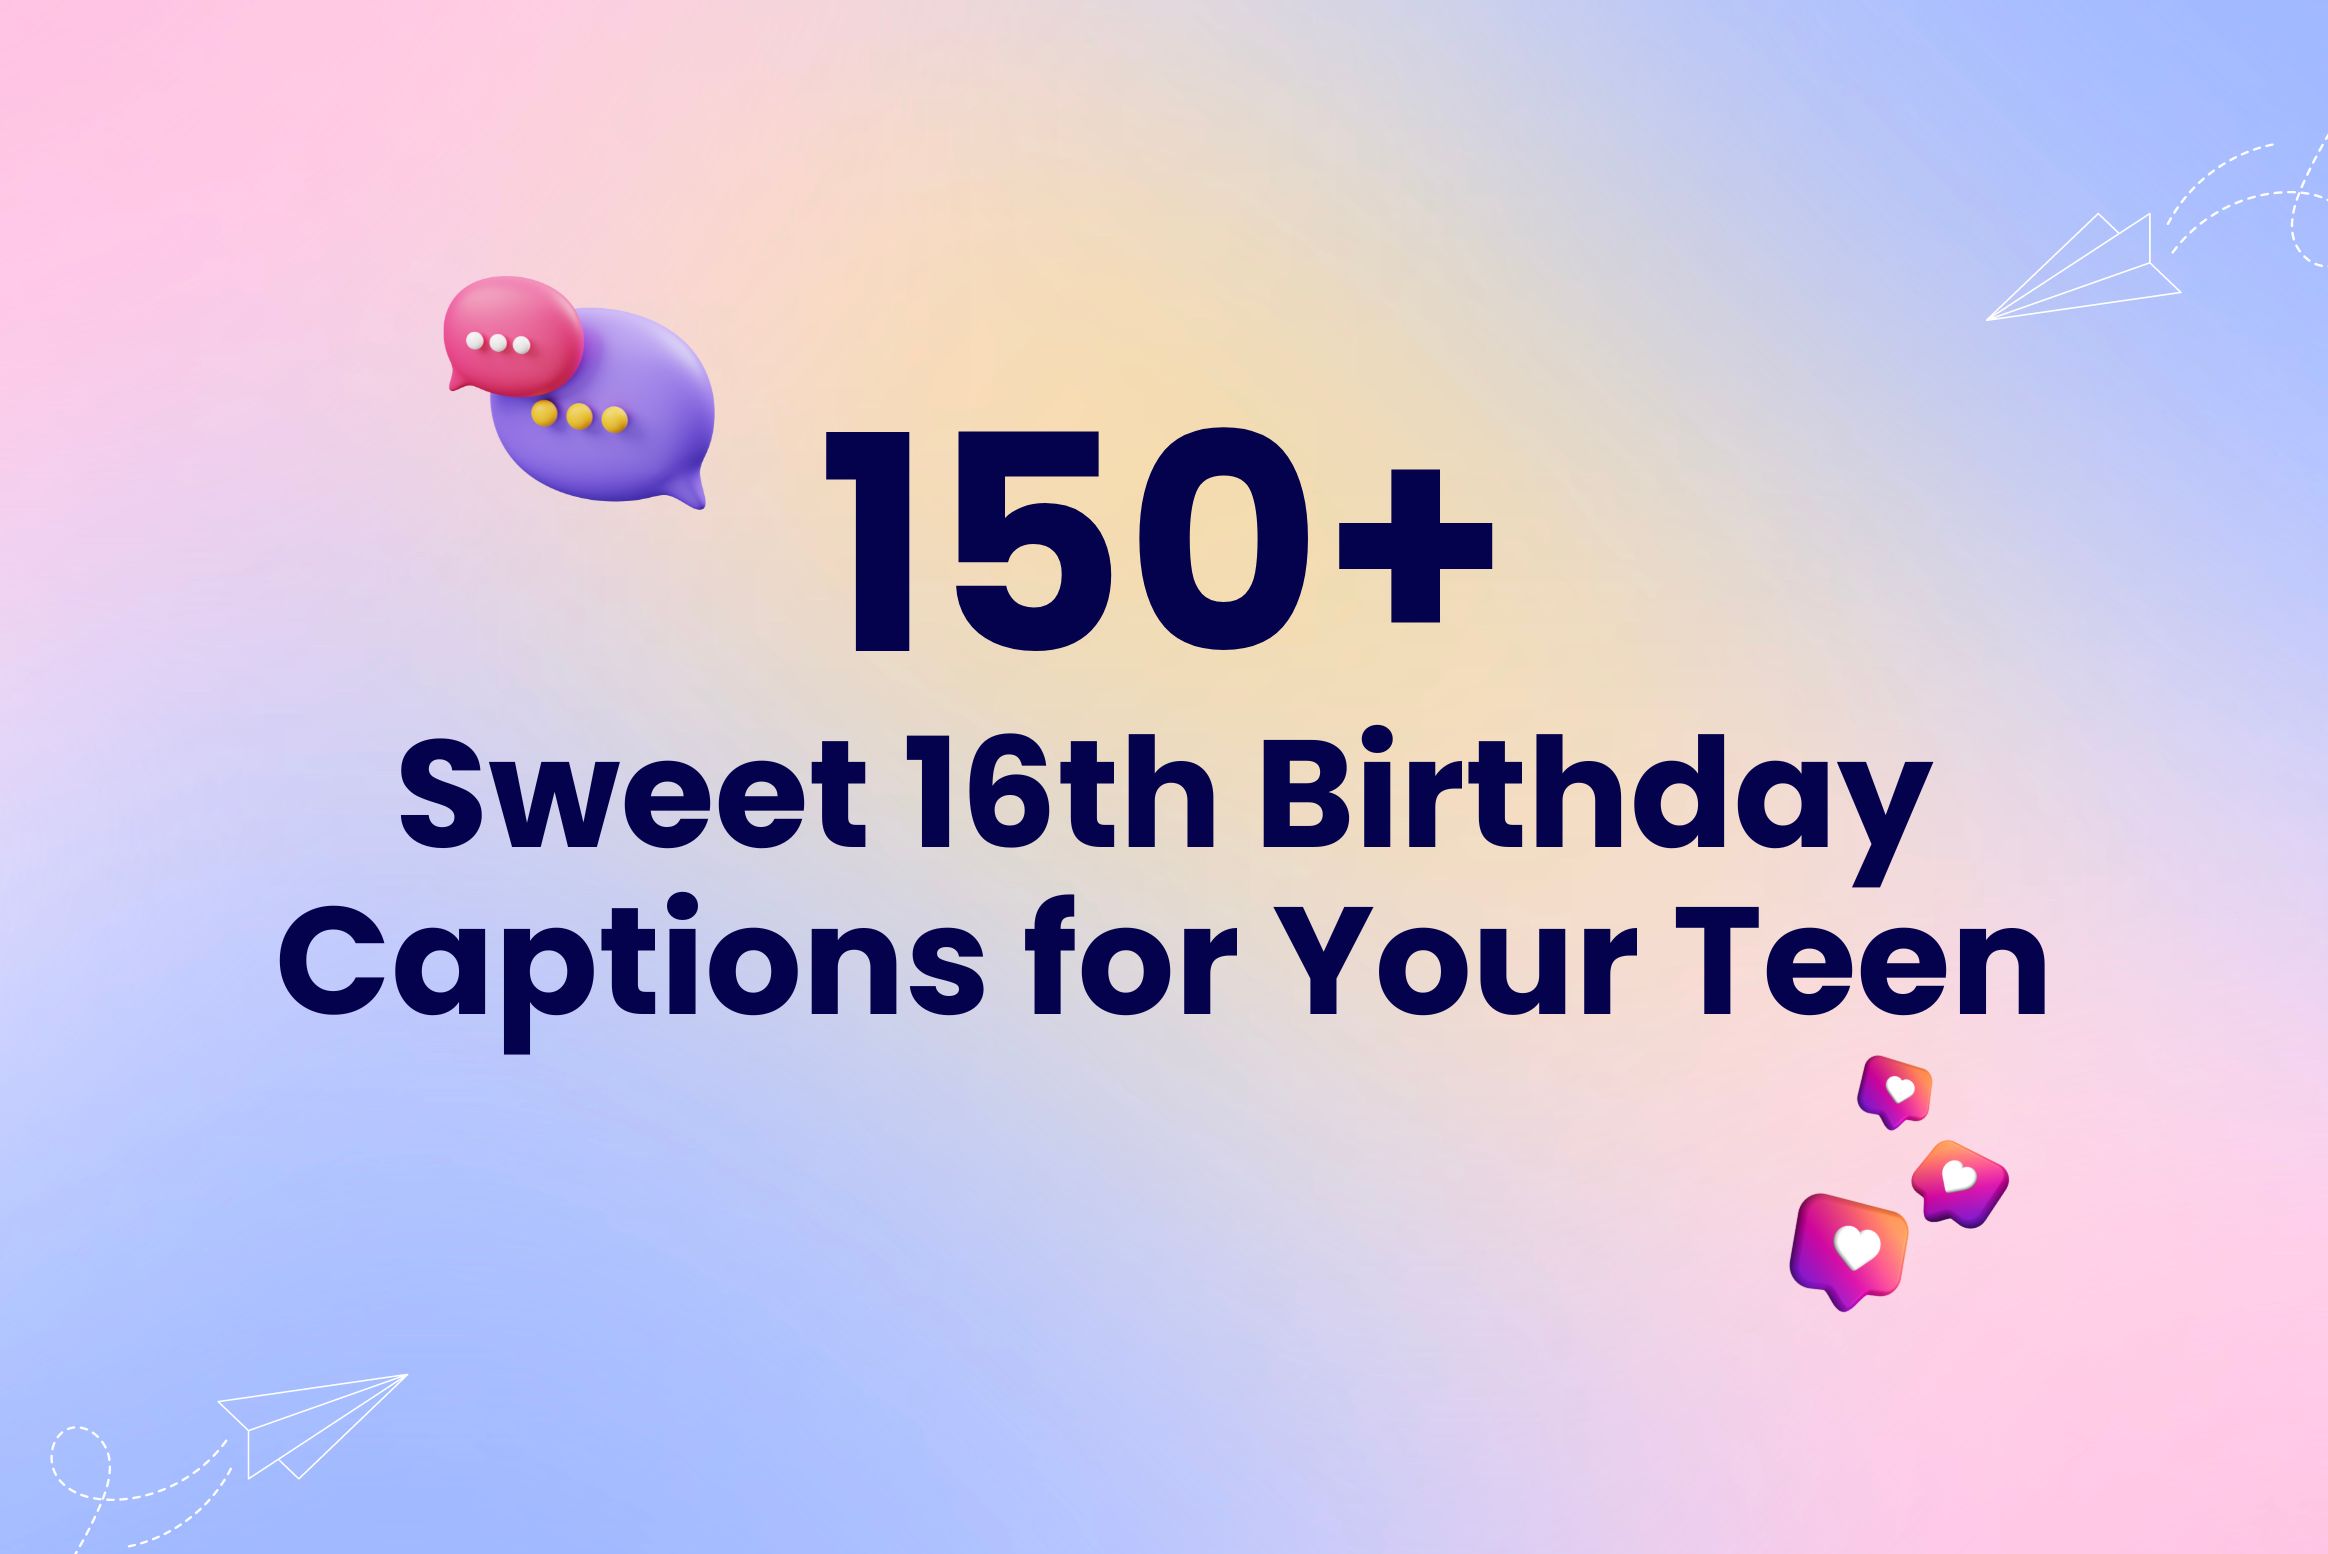 16th birthday captions